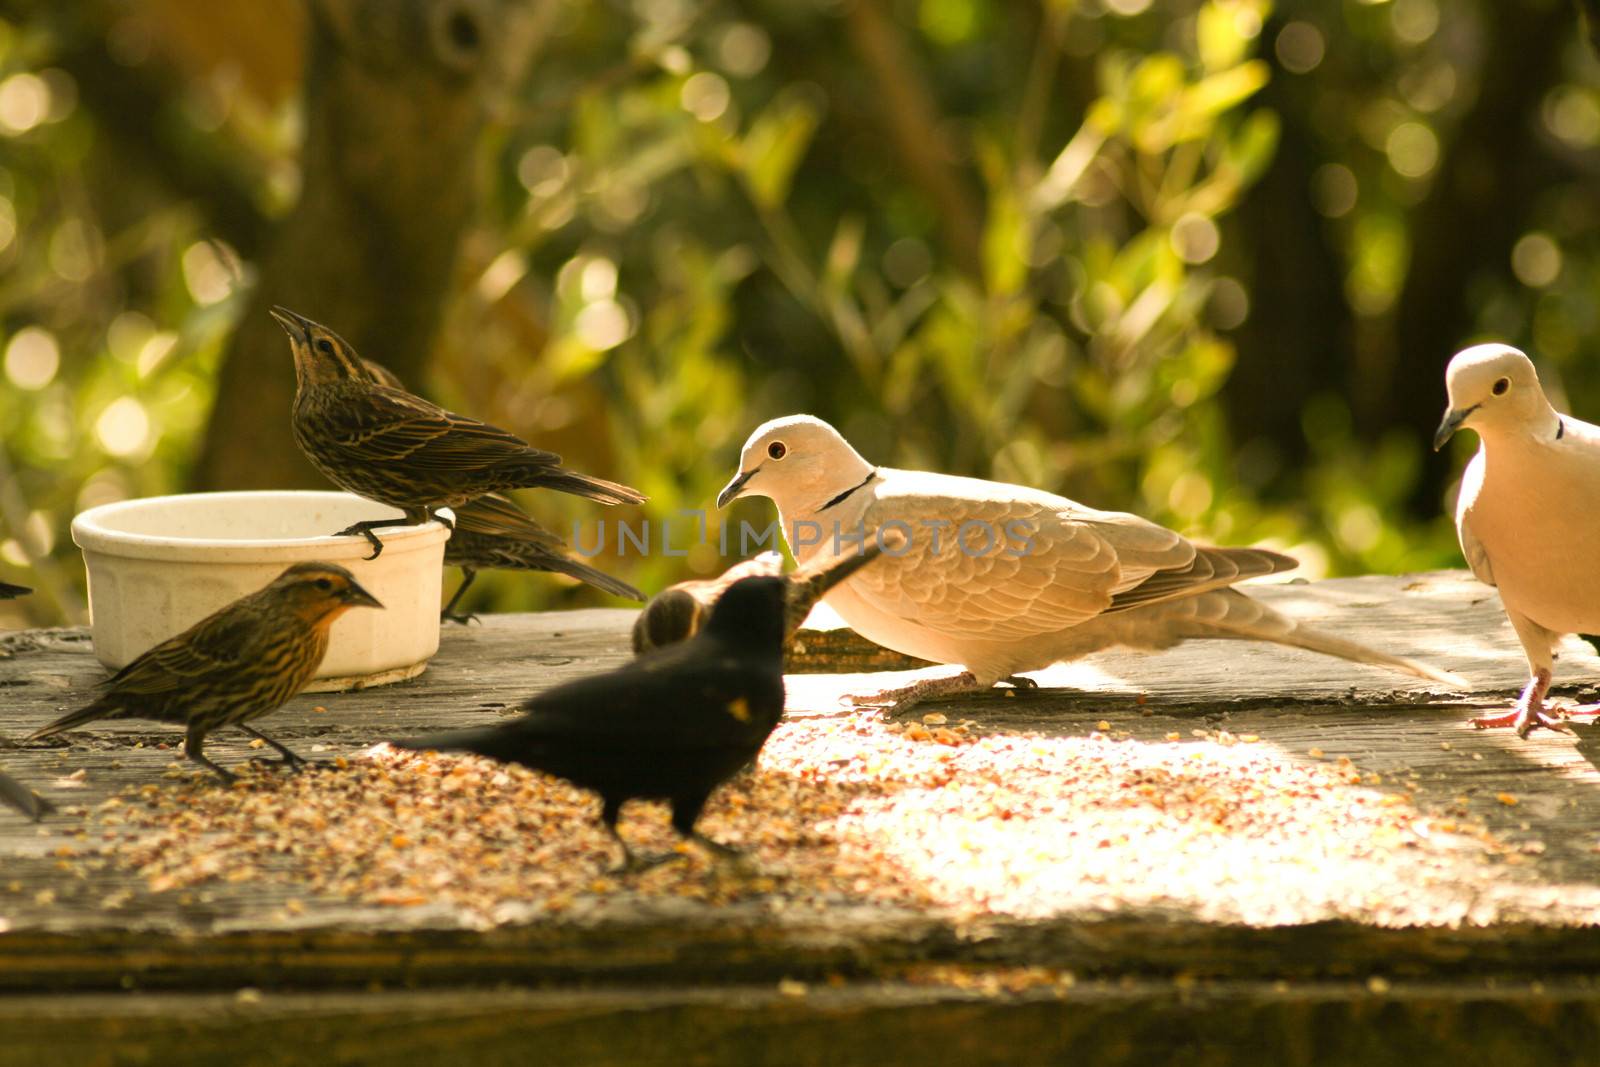 Pigeon with other birds having their meal, Key Largo, Florida Keys, Miami, Miami-Dade County, Florida, USA